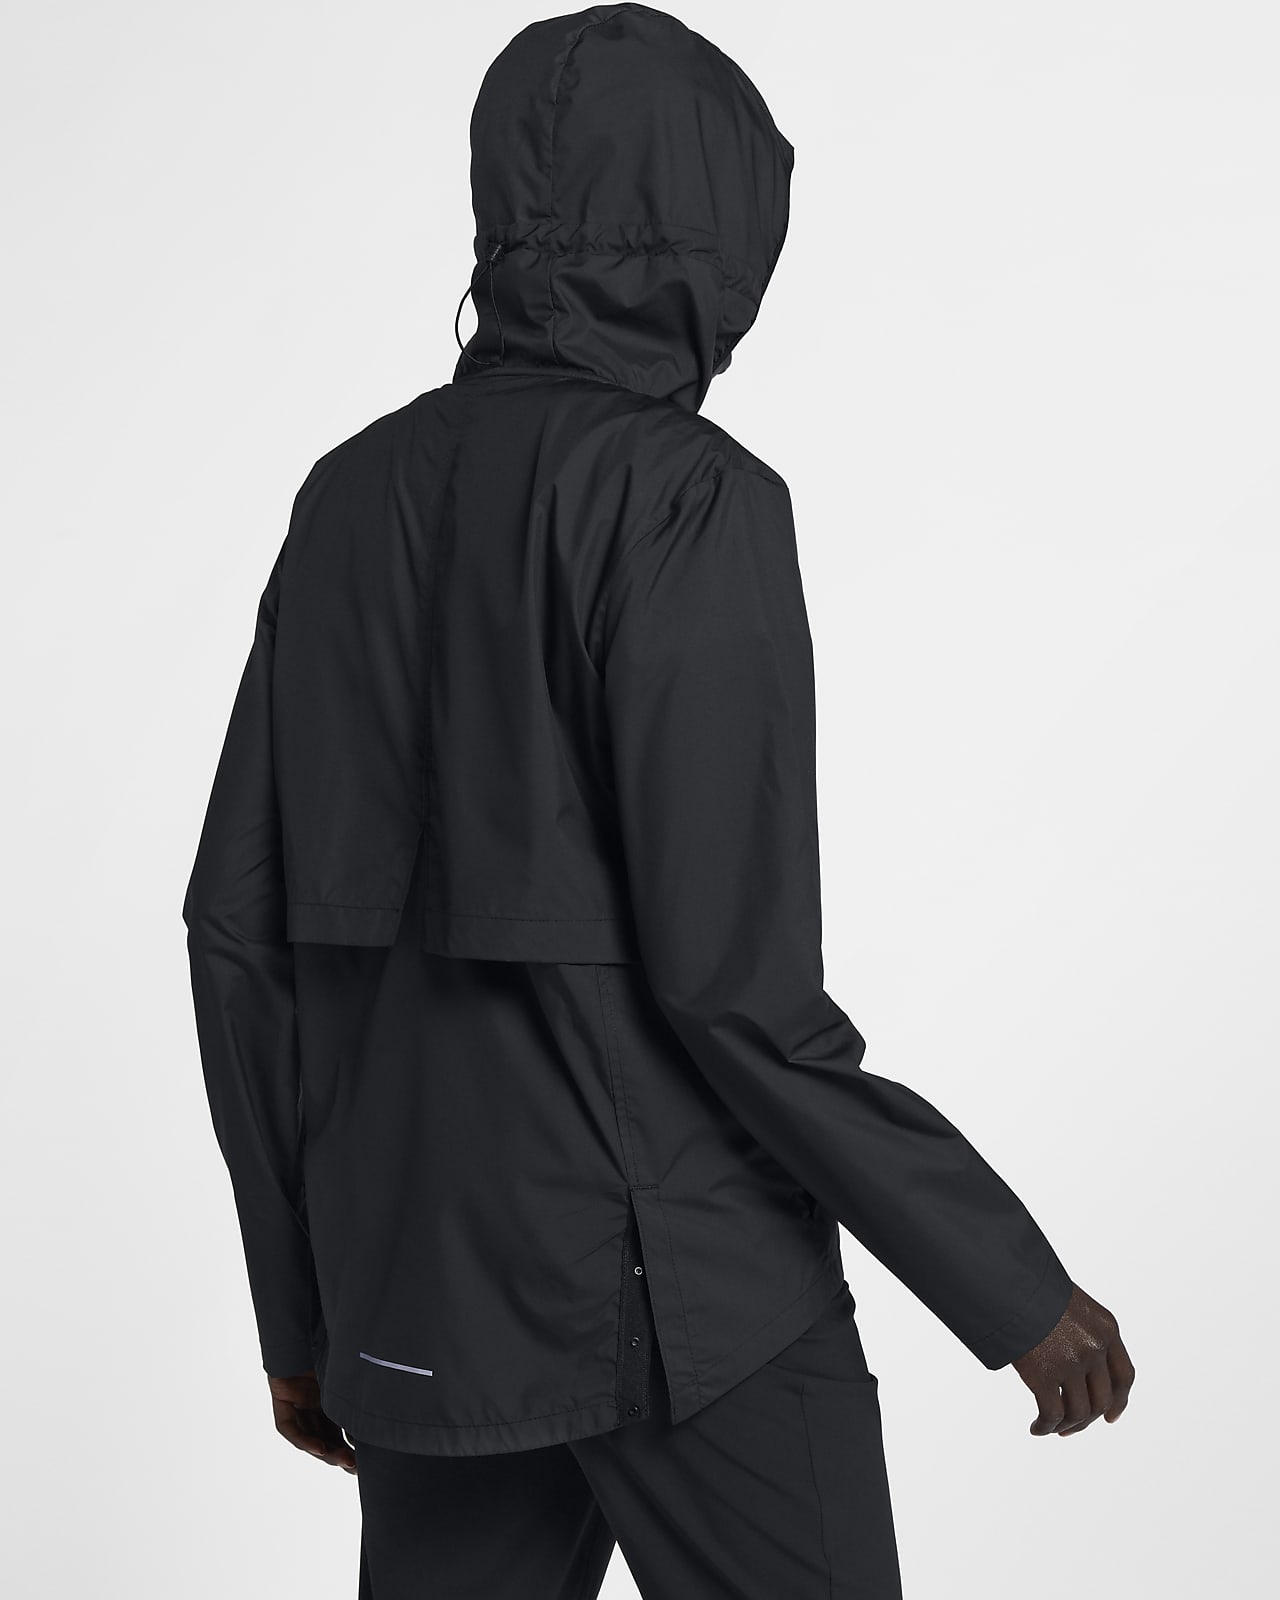 nike women's black rain jacket